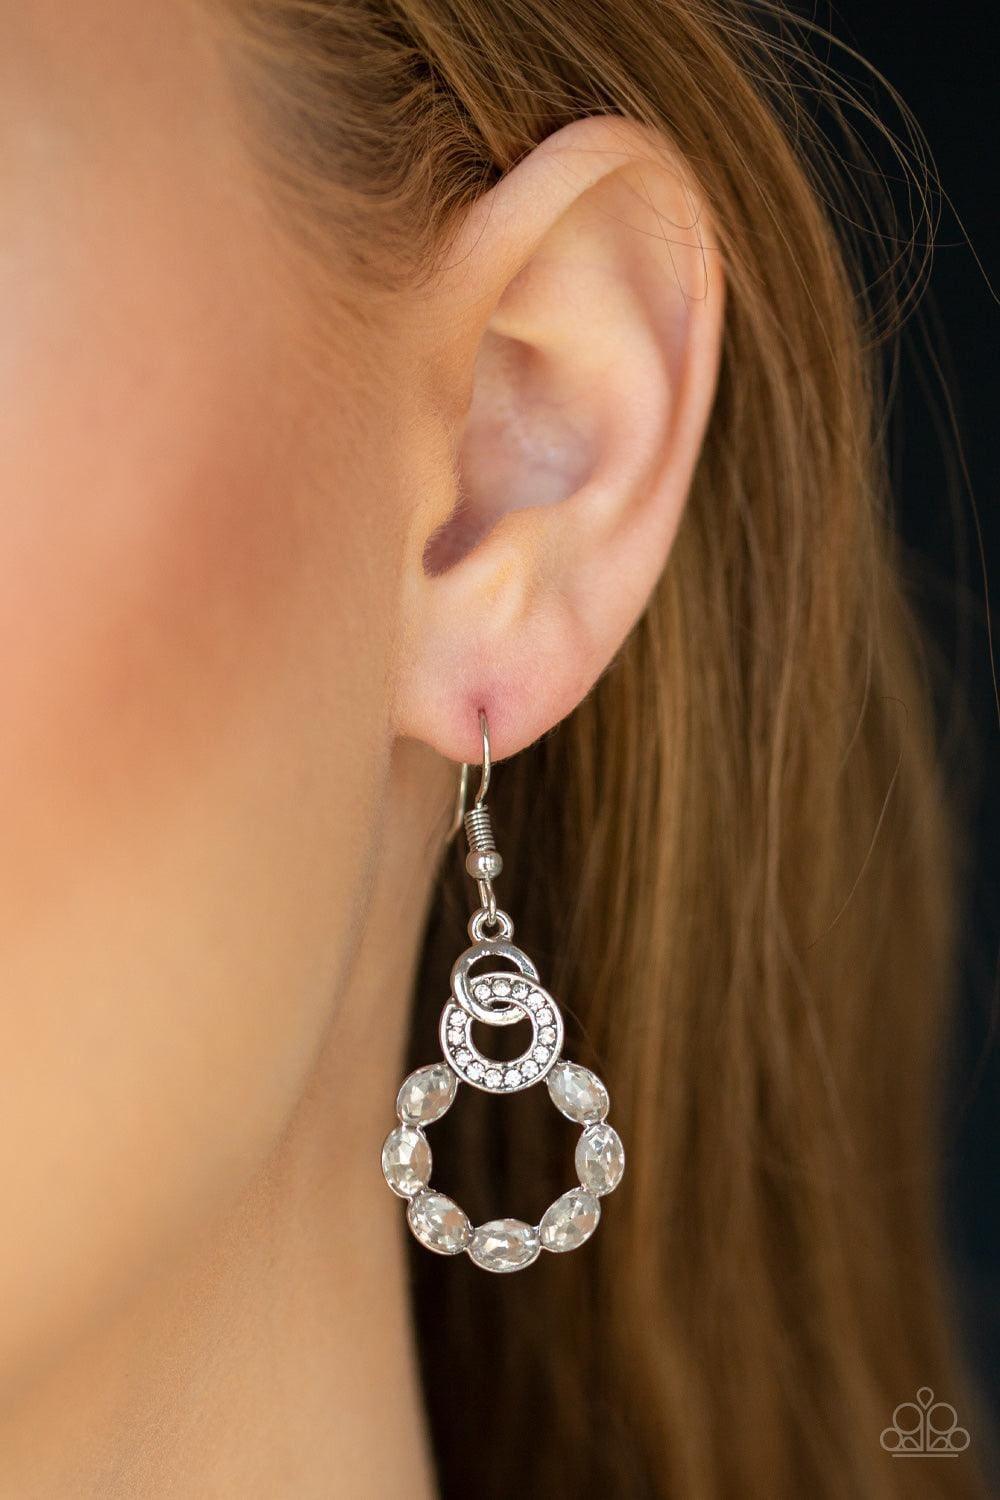 Paparazzi Accessories - Diamond Deluxe - White Earrings - Bling by JessieK